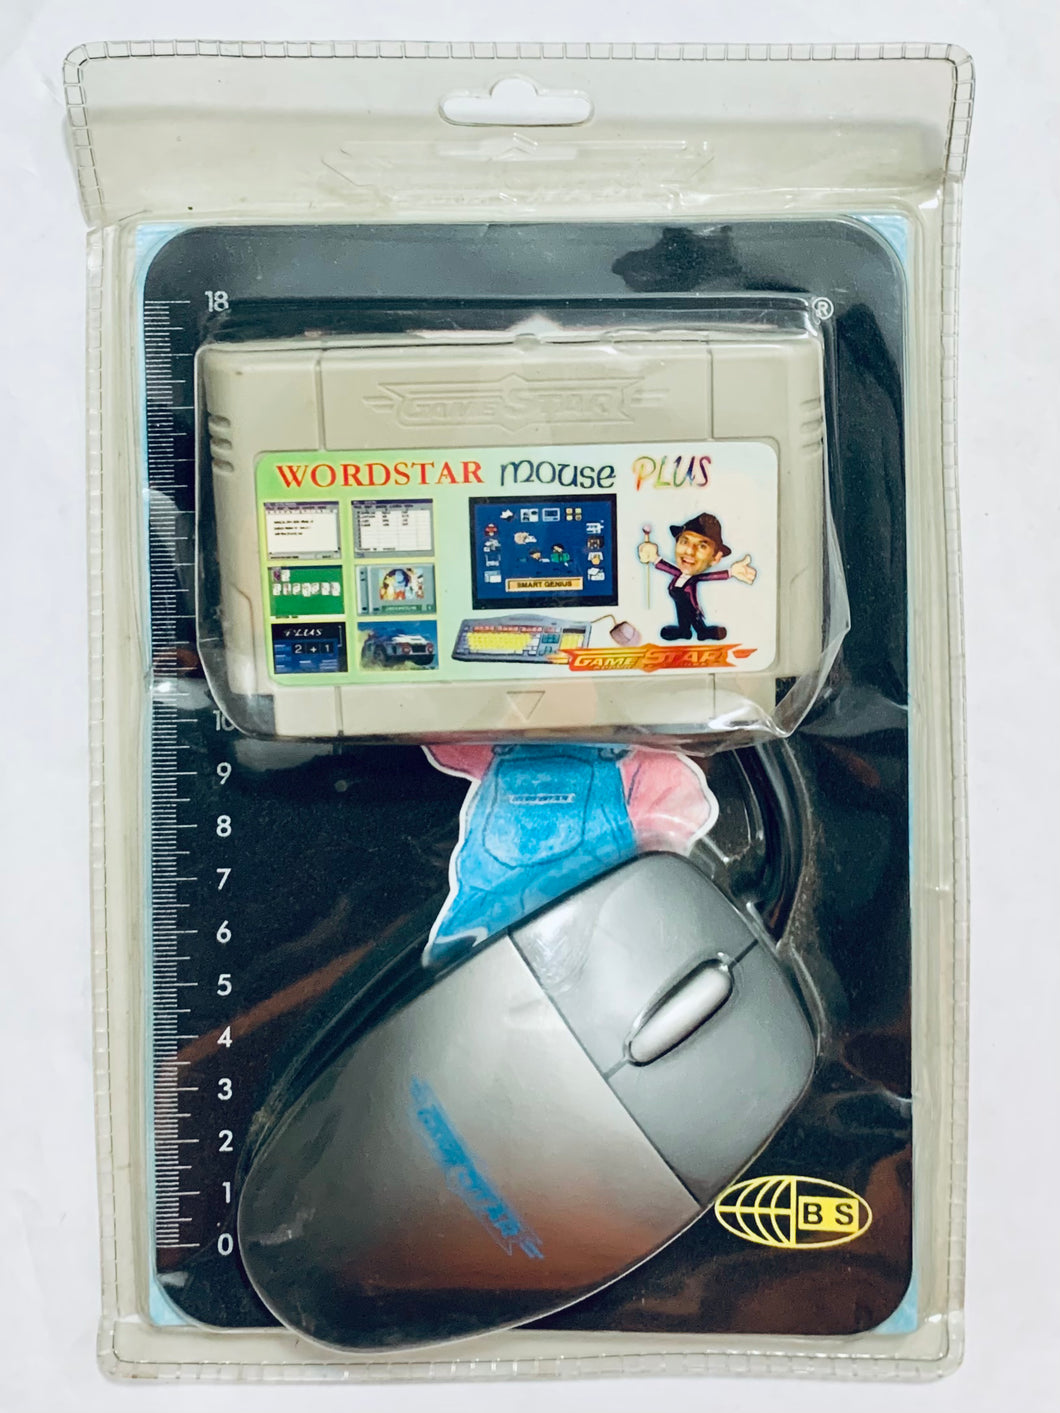 Smart Genius Deluxe WordStar Mouse Plus - Game Star Series - Famiclone - Brand New (06M1-2001)